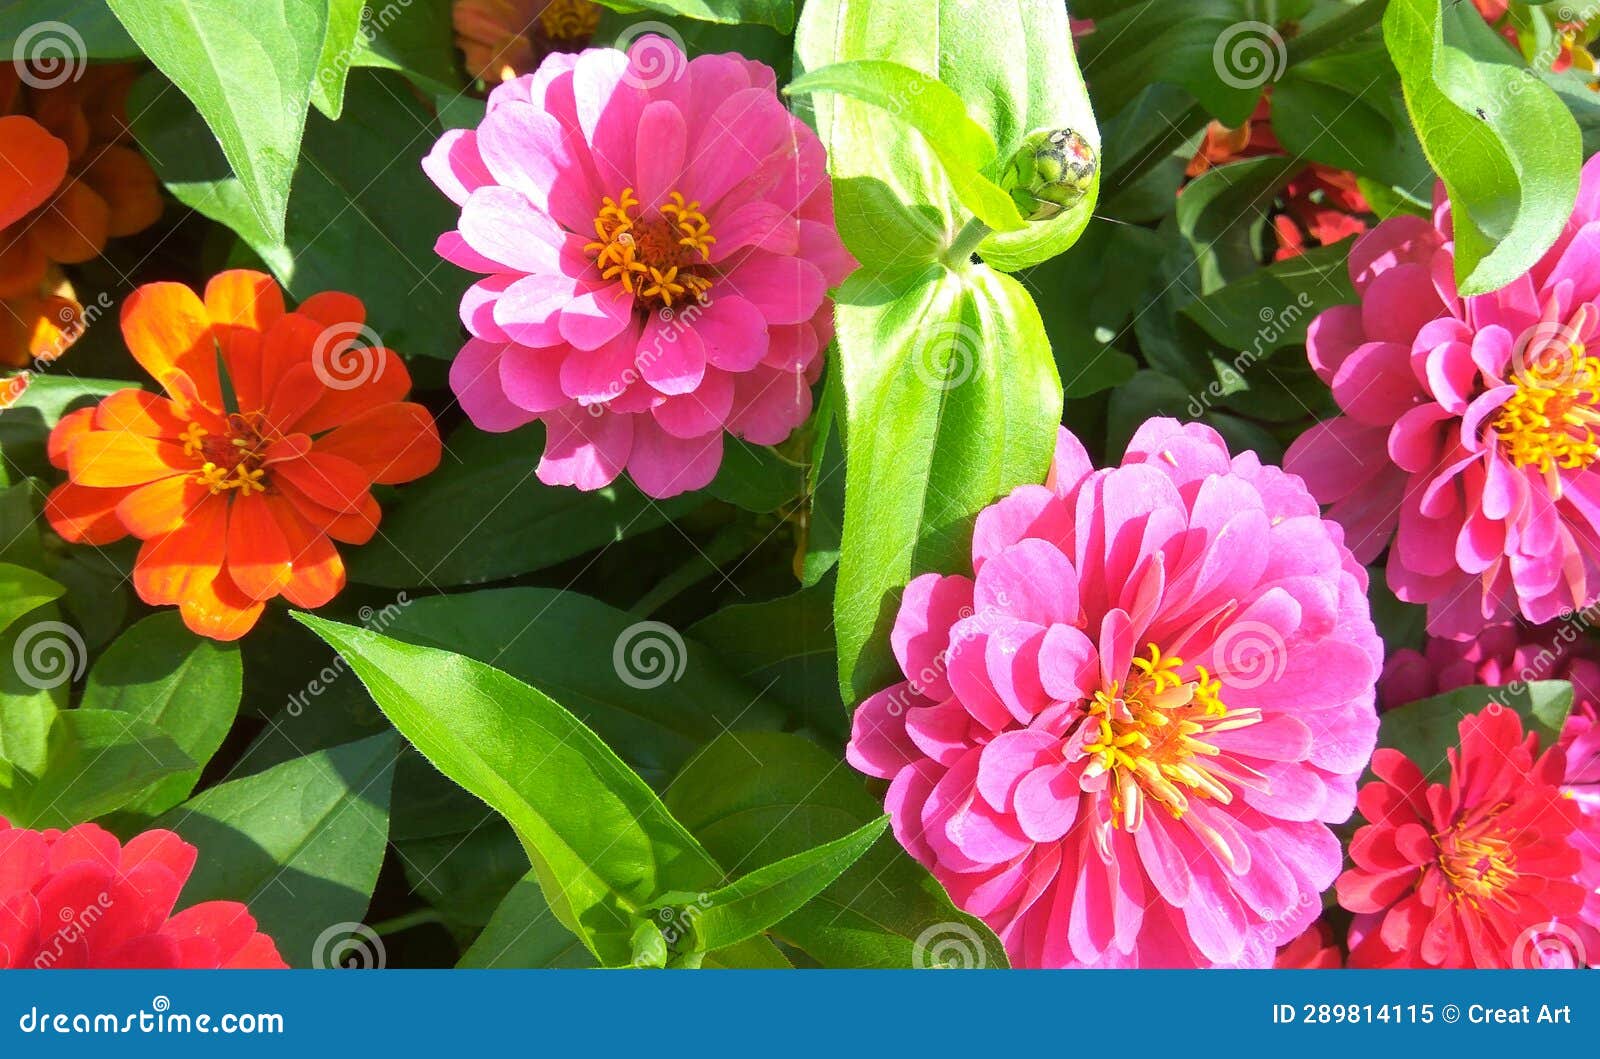 beutiful-pink-flowers